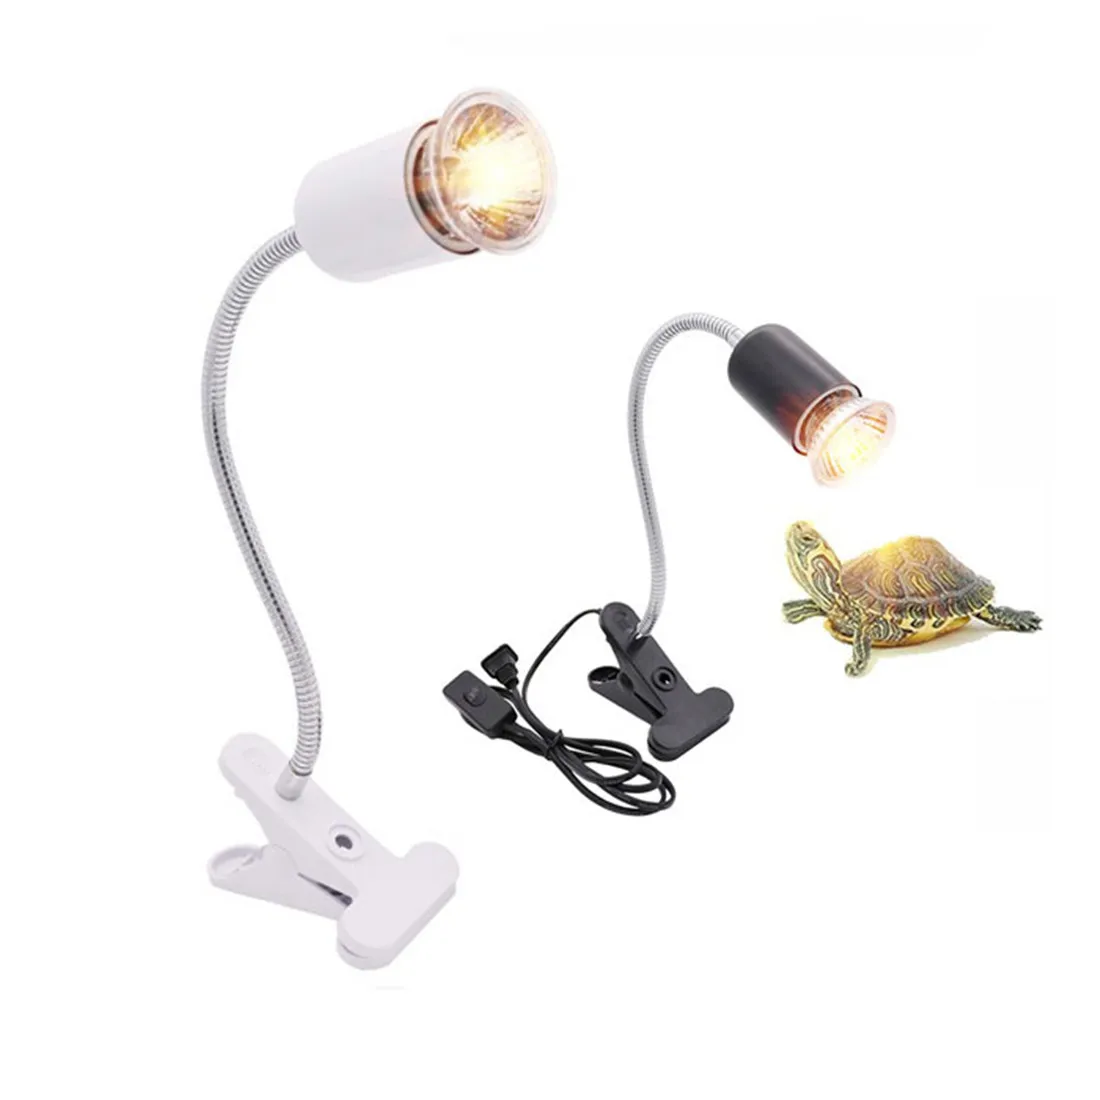 50W Halogen Bulb Included Reptile Heat Lamp Adjustable Gooseneck Aquarium Tank Heating Lamps for Tortoise Lizard Snake Terrarium